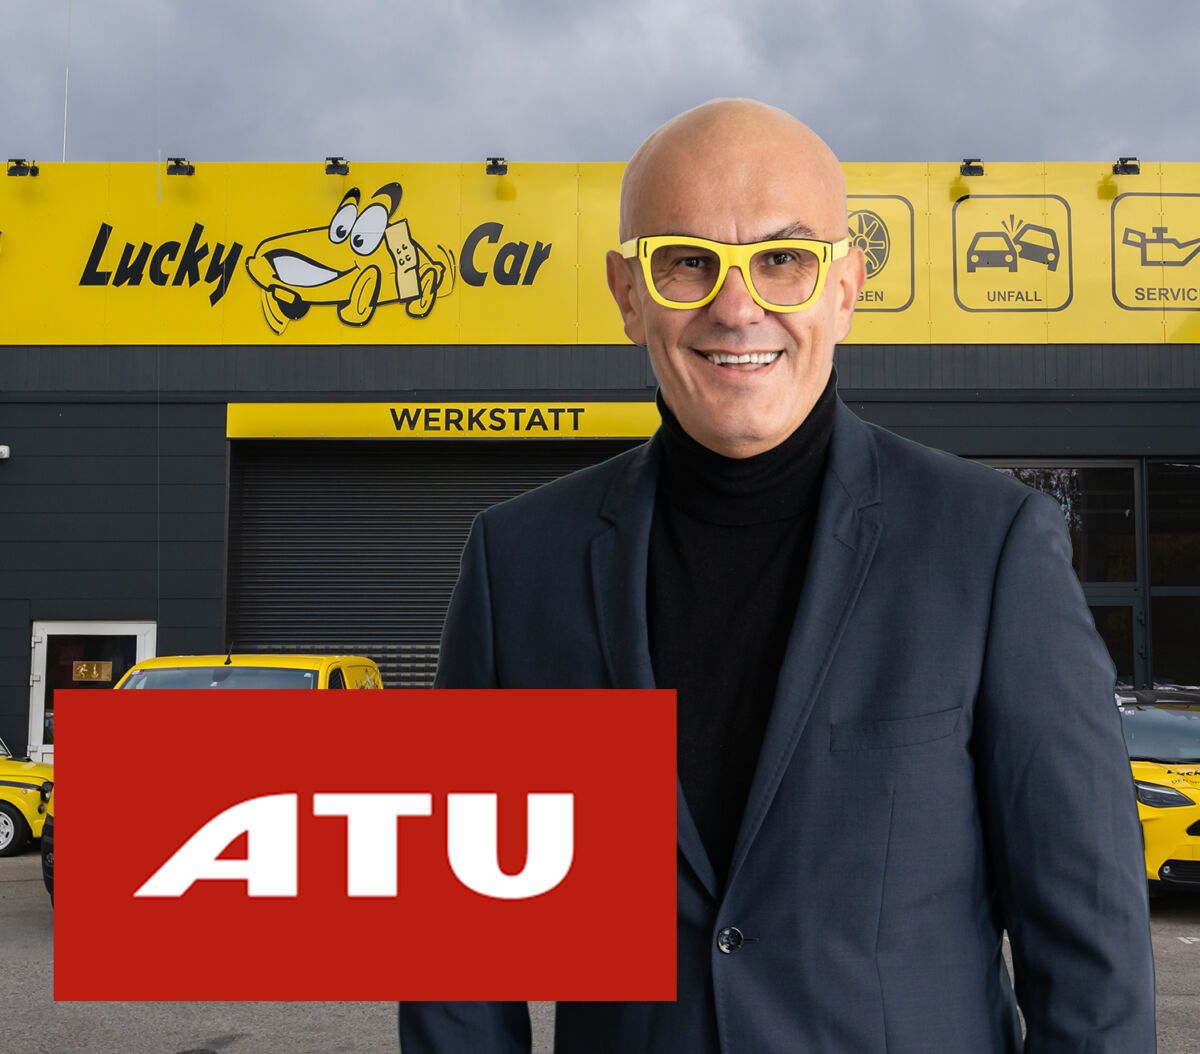 Lucky Car Austria - Vereistes Schlüsselloch? 👉 Lucky Tipps zur